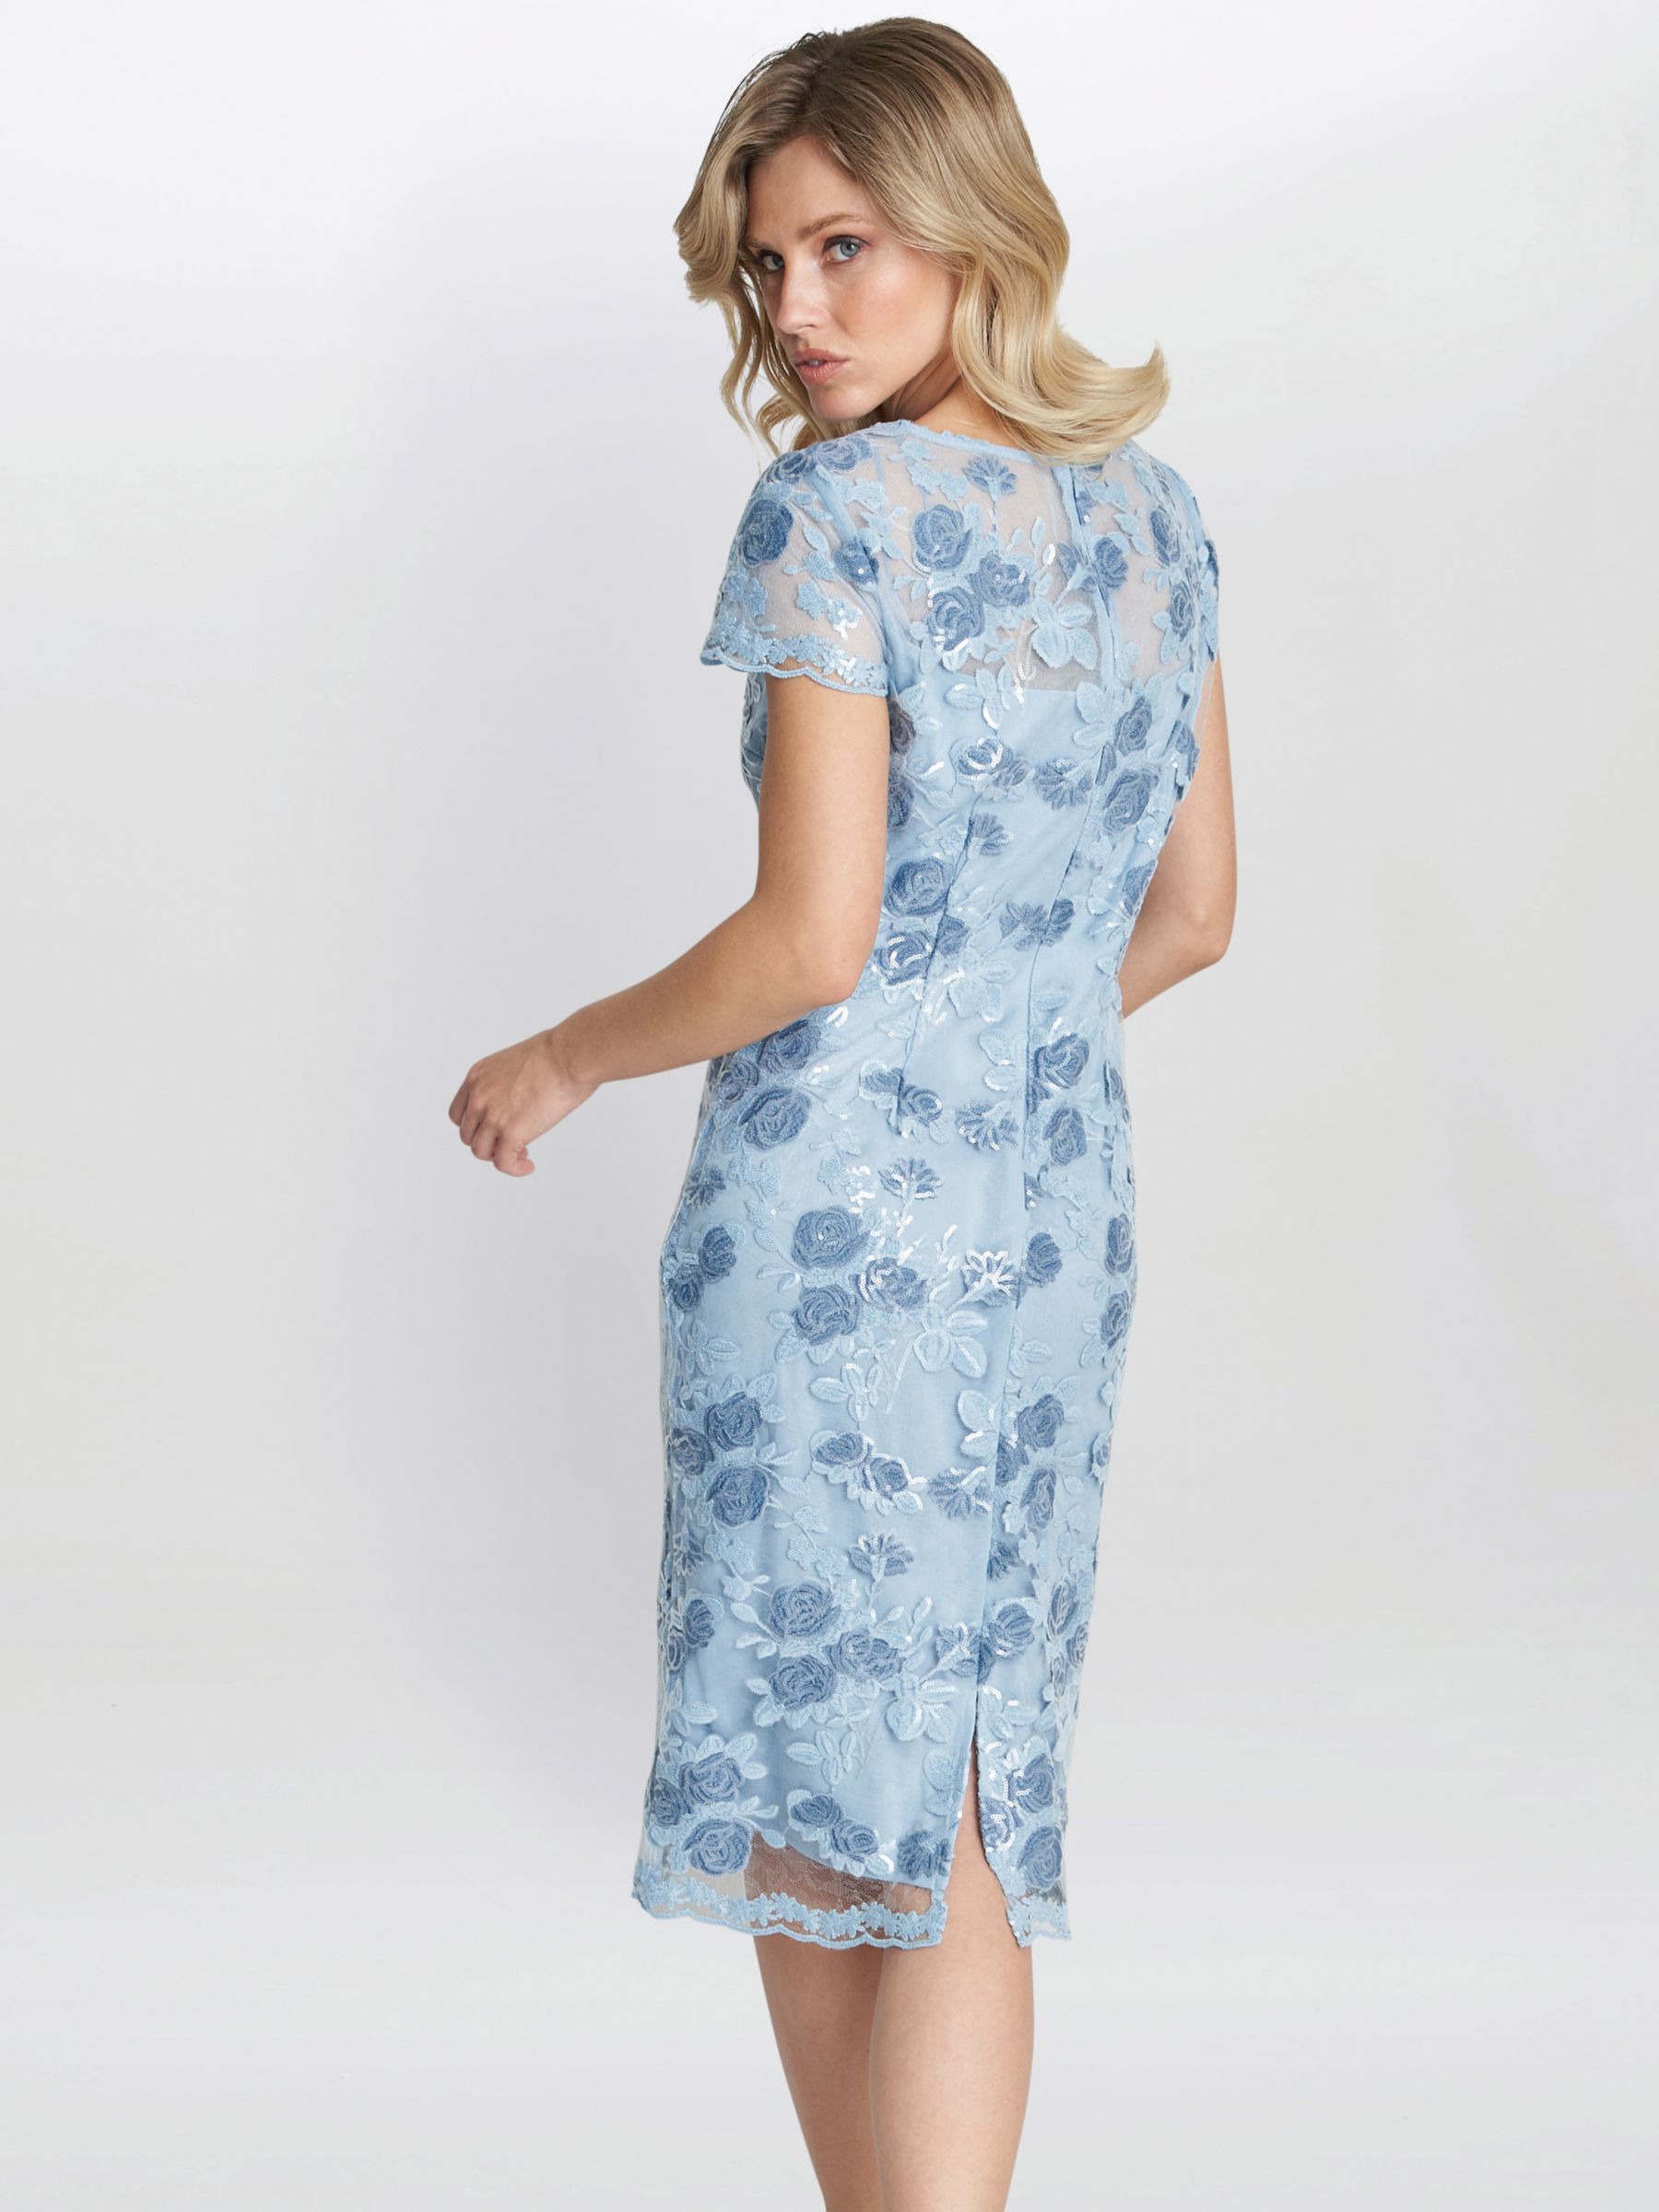 Gina Bacconi Millie Embroidered Lace Midi Shift Dress, Sky Blue, 10